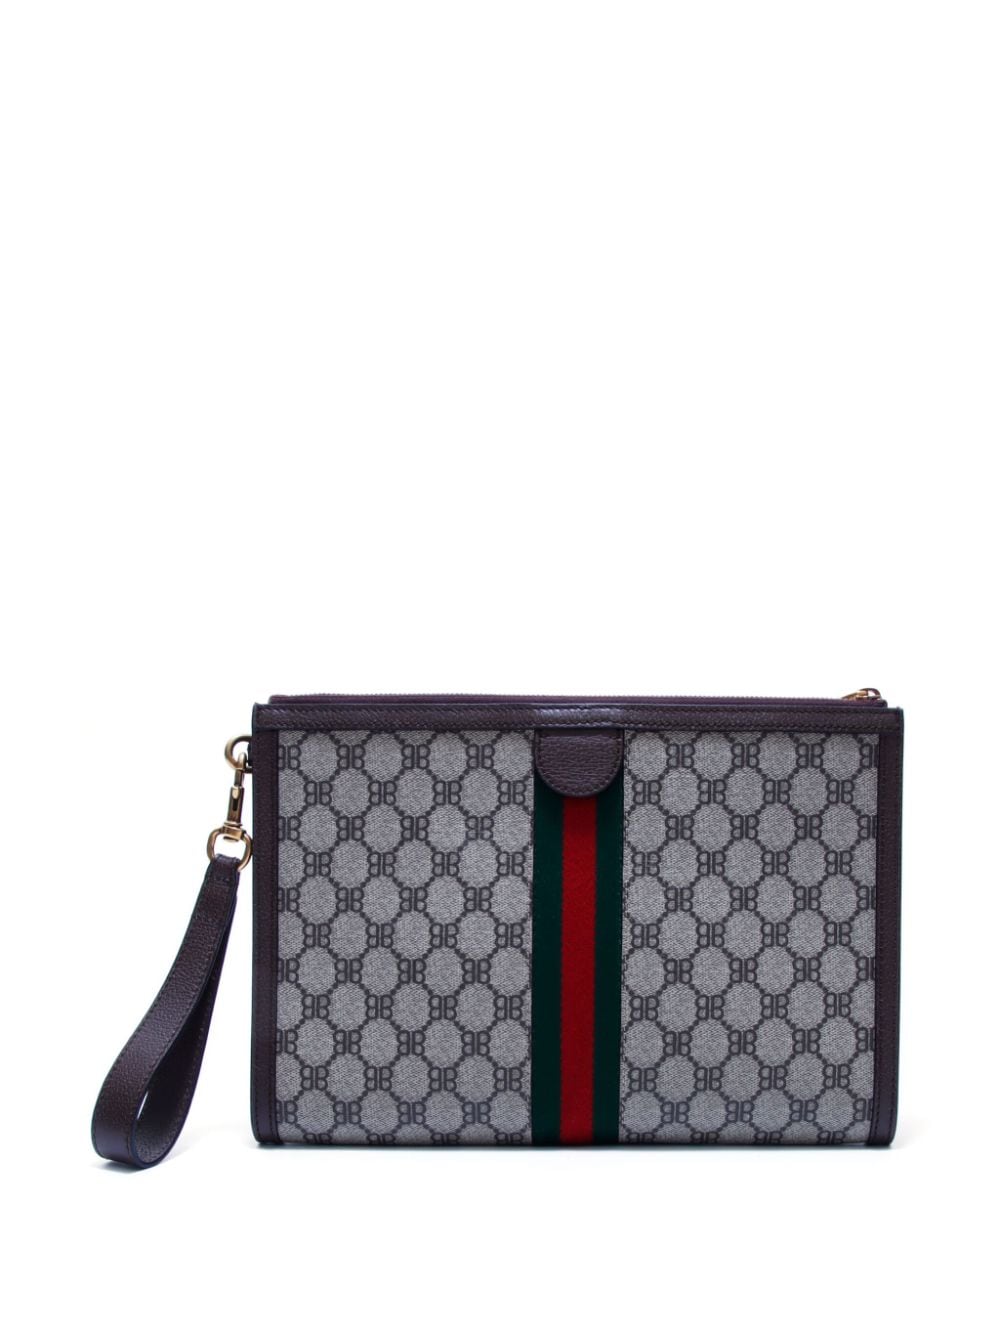 Pre-owned Balenciaga X Gucci 2010-2020s Clutch Bag In Brown